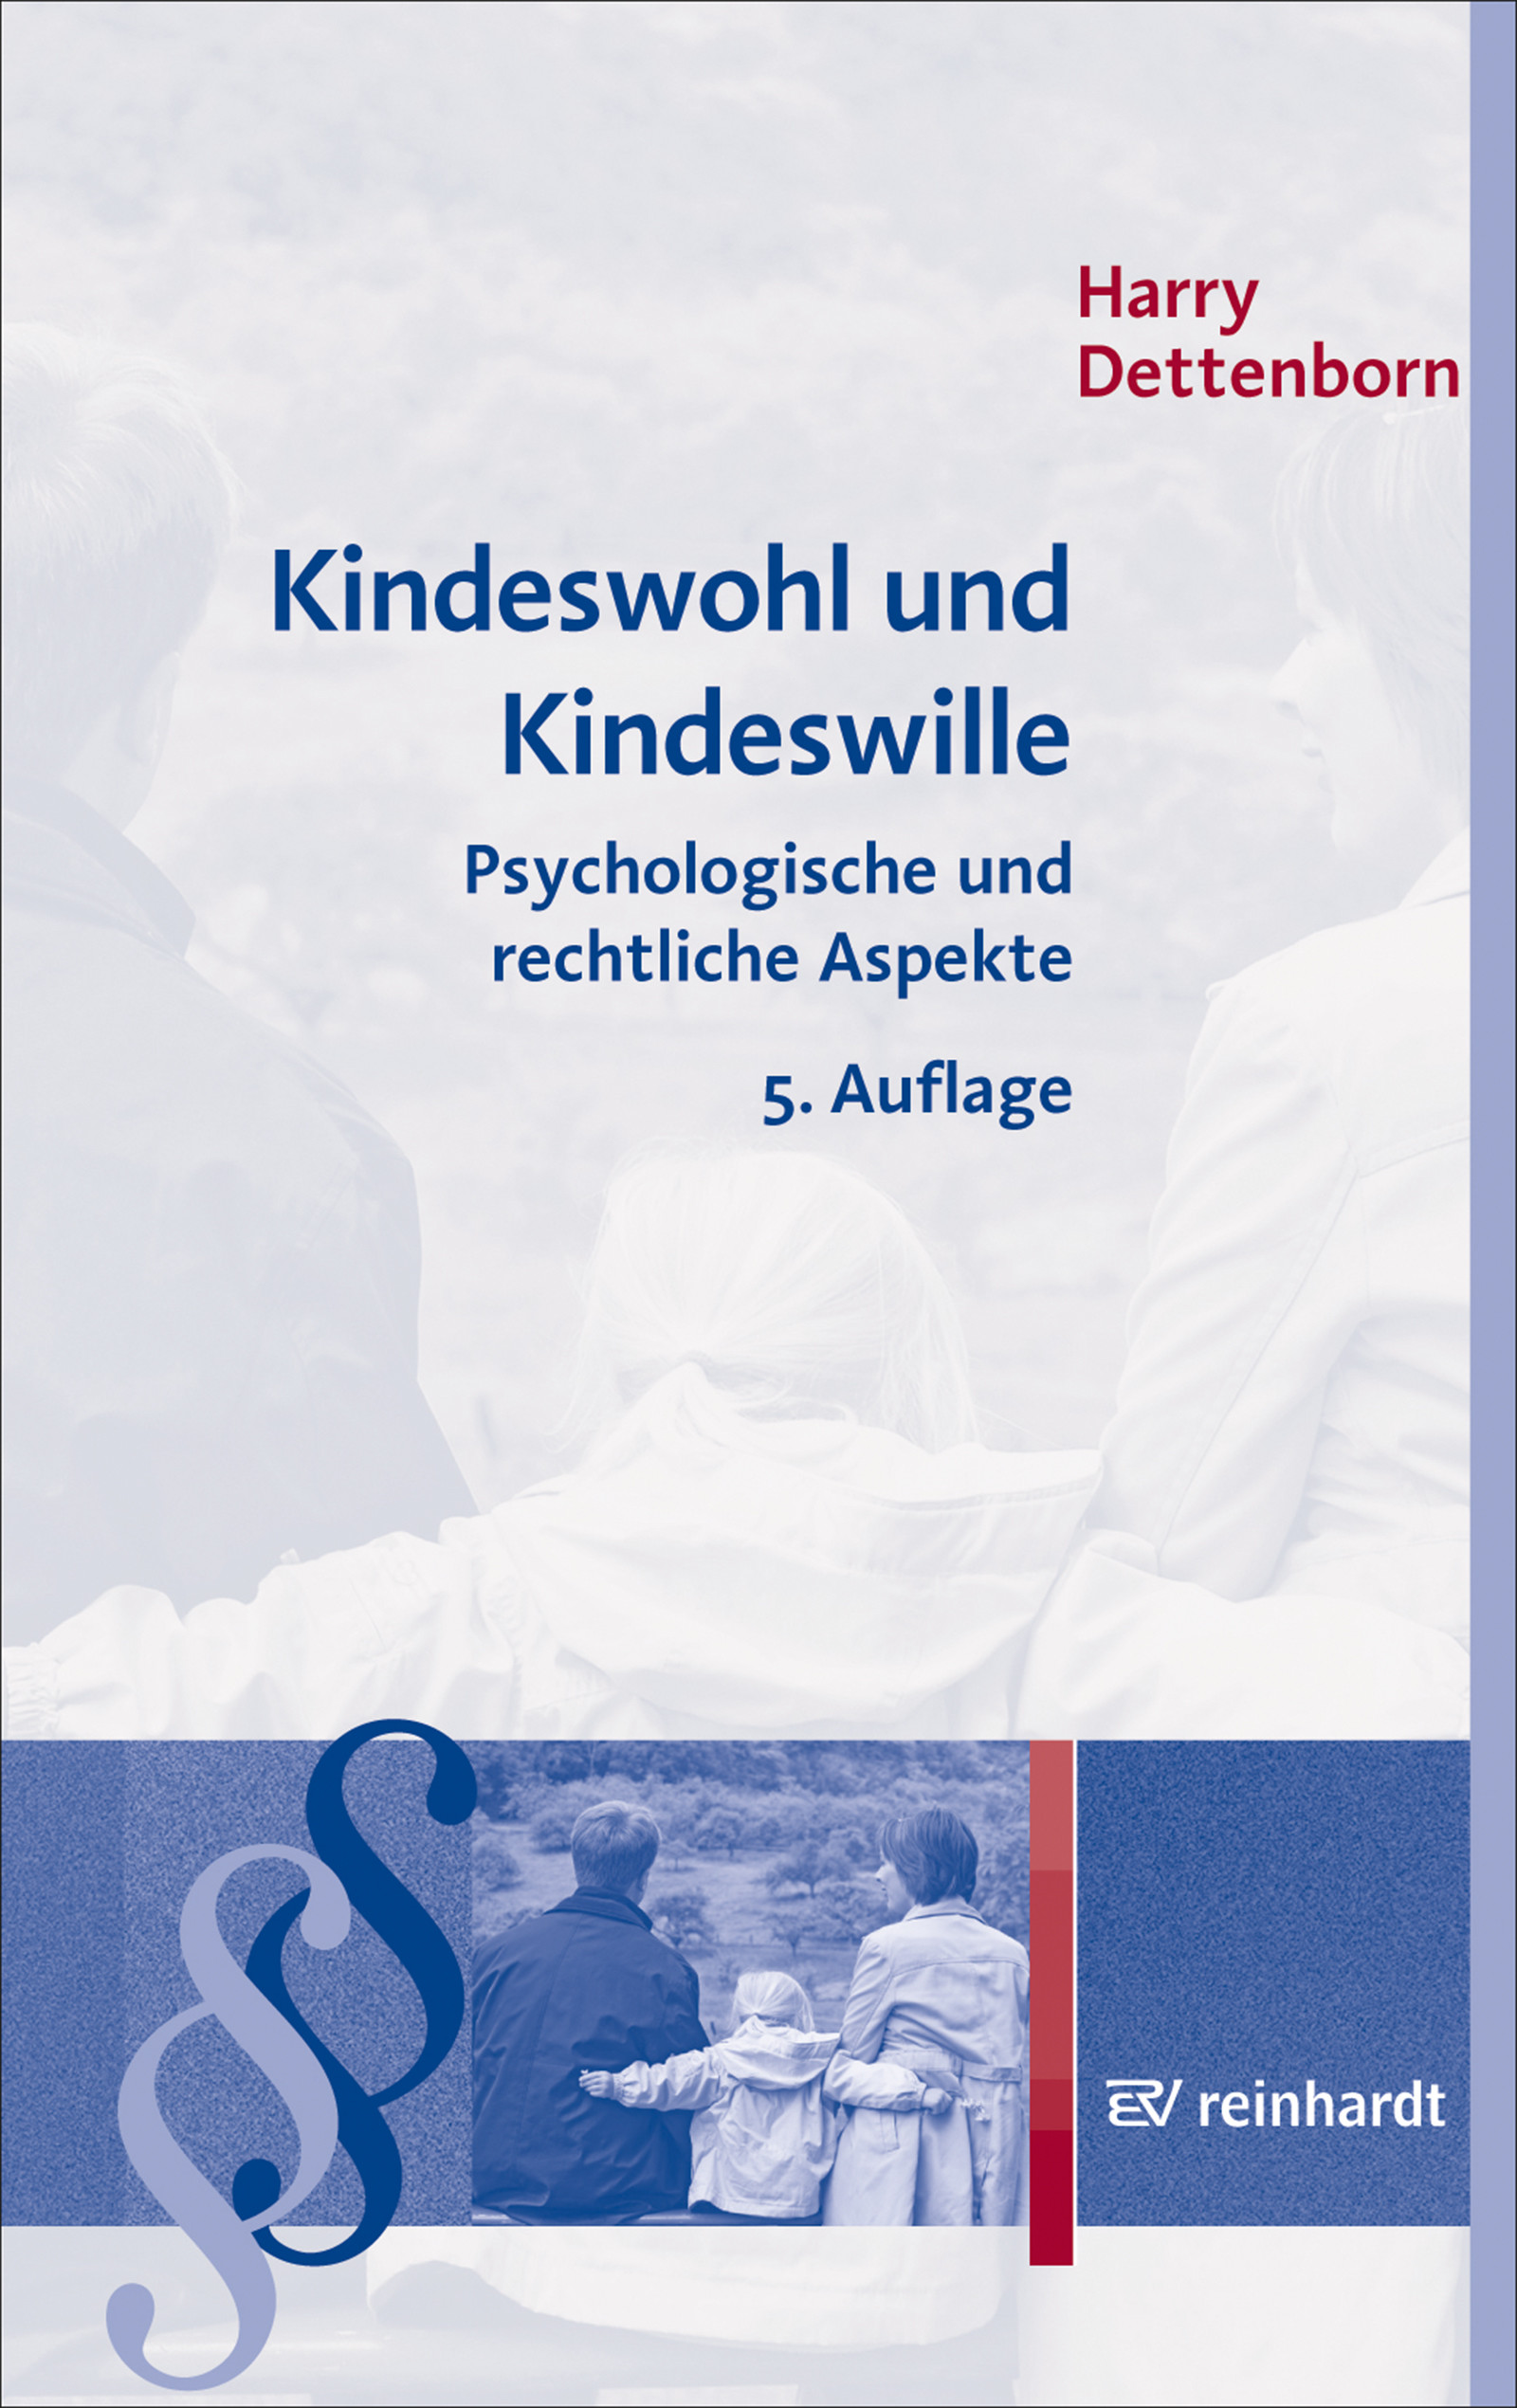 Kindeswohl und Kindeswille - ePUB eBook kaufen | Ebooks Angewandte ...